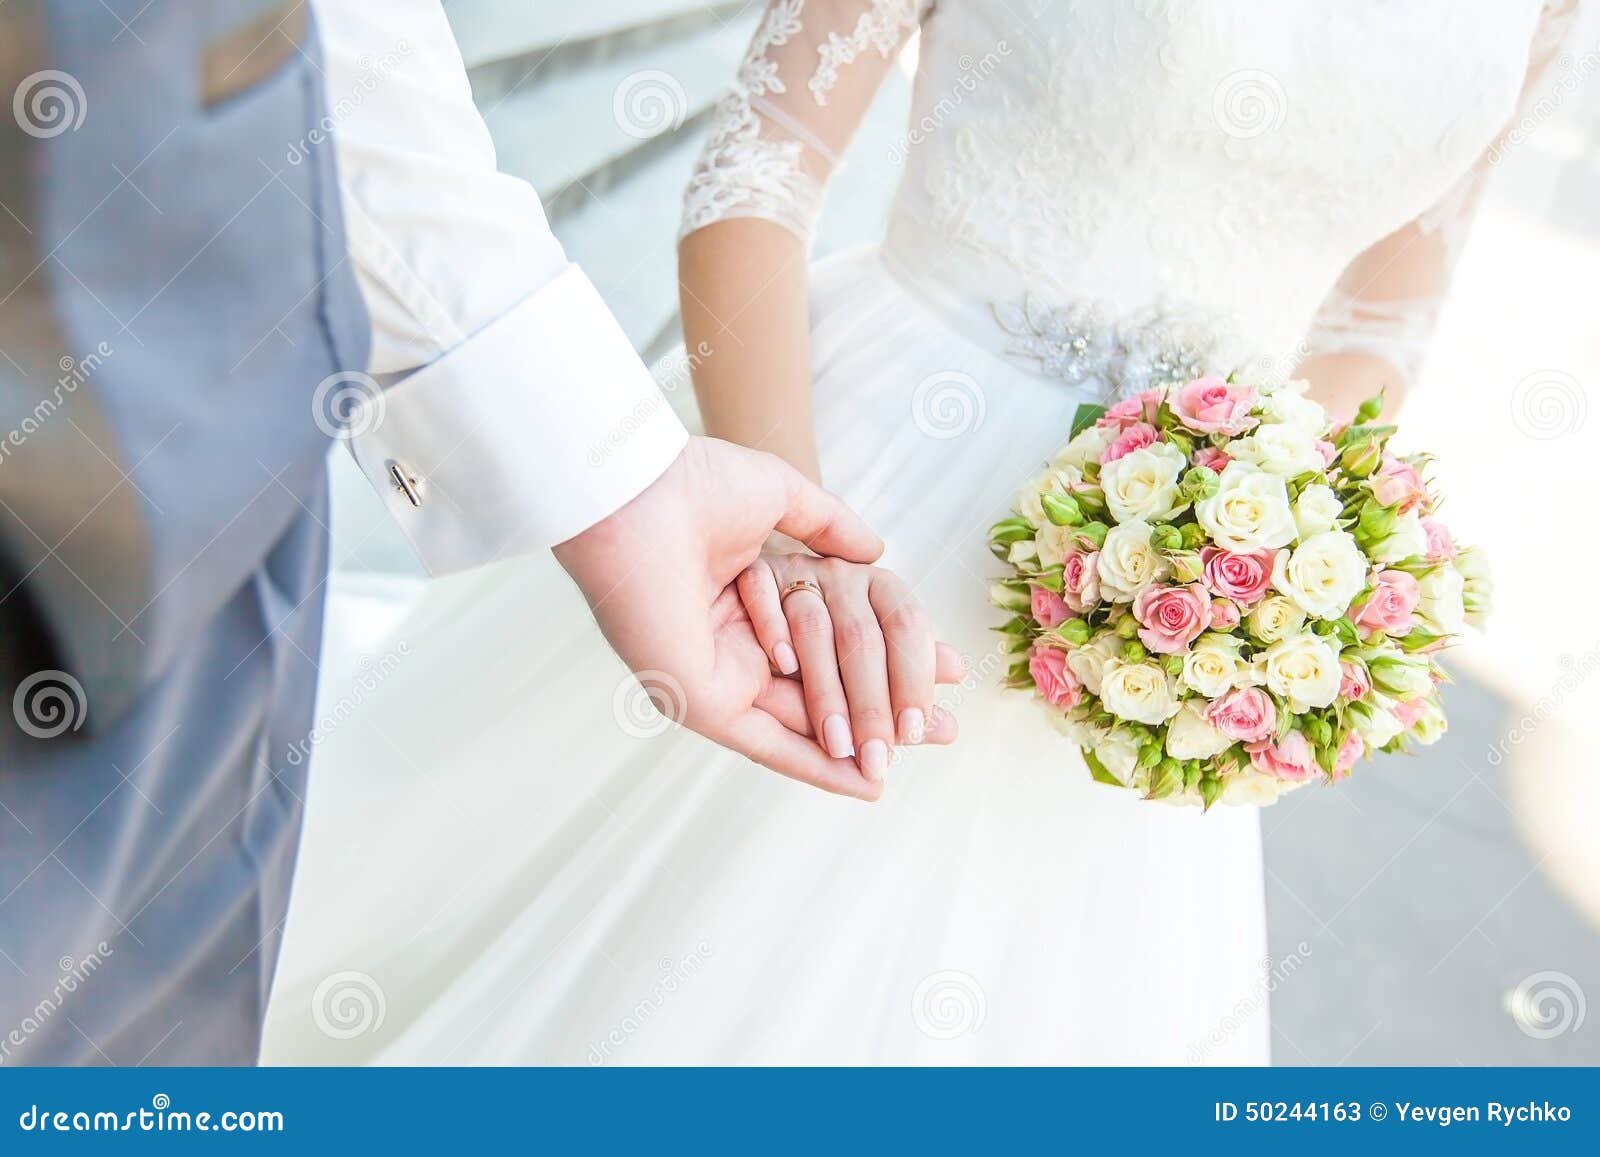 Wedding Couple Holding Hands Stock Image - Image of finger, nature ...